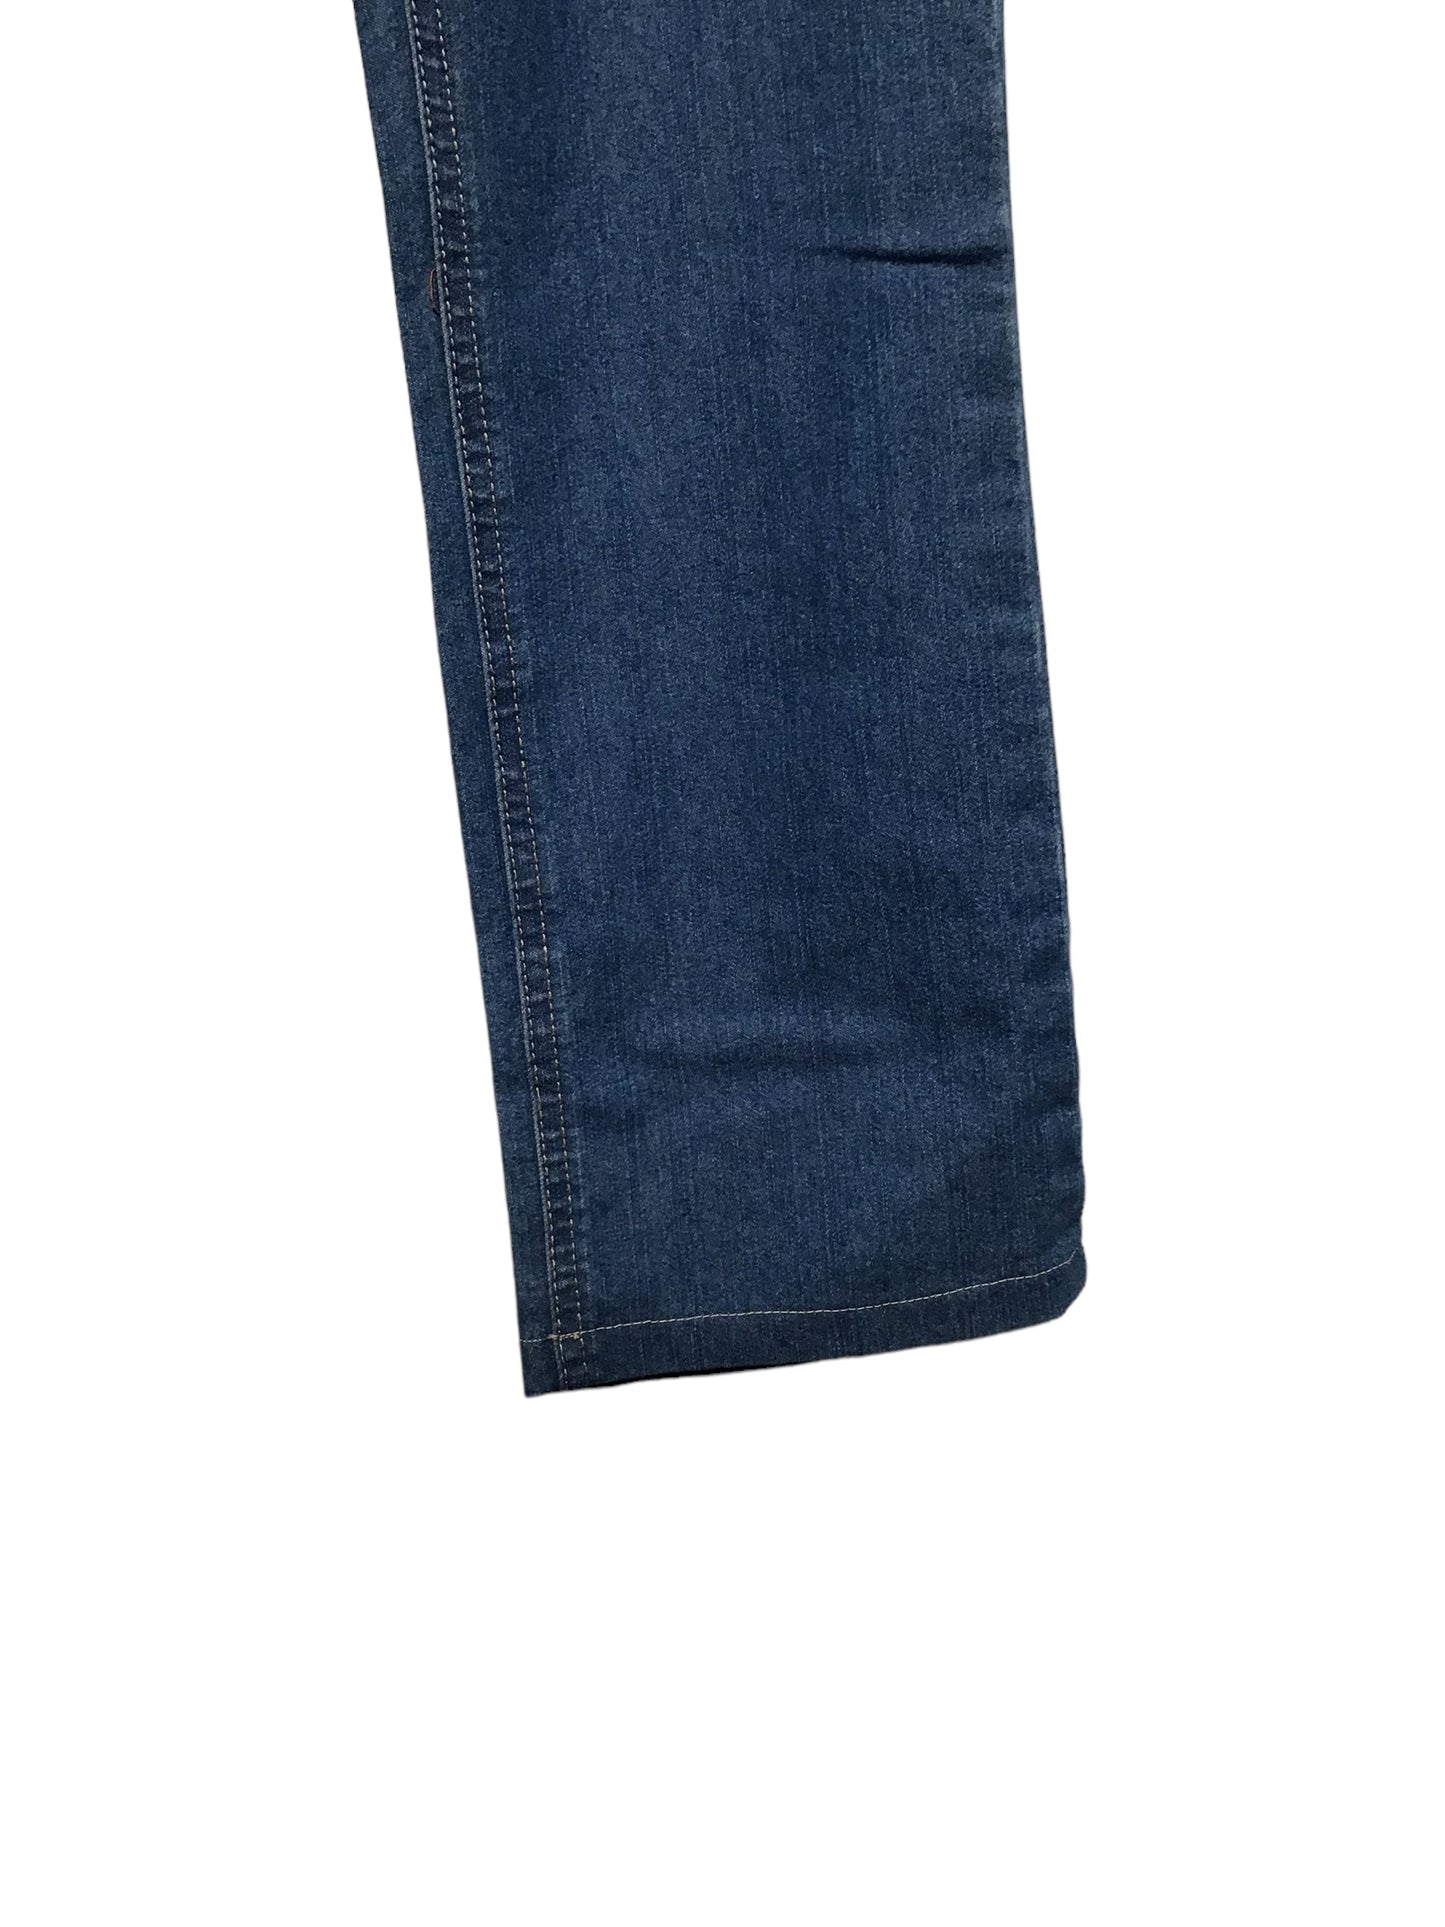 Blue Denim Jeans (30x30)